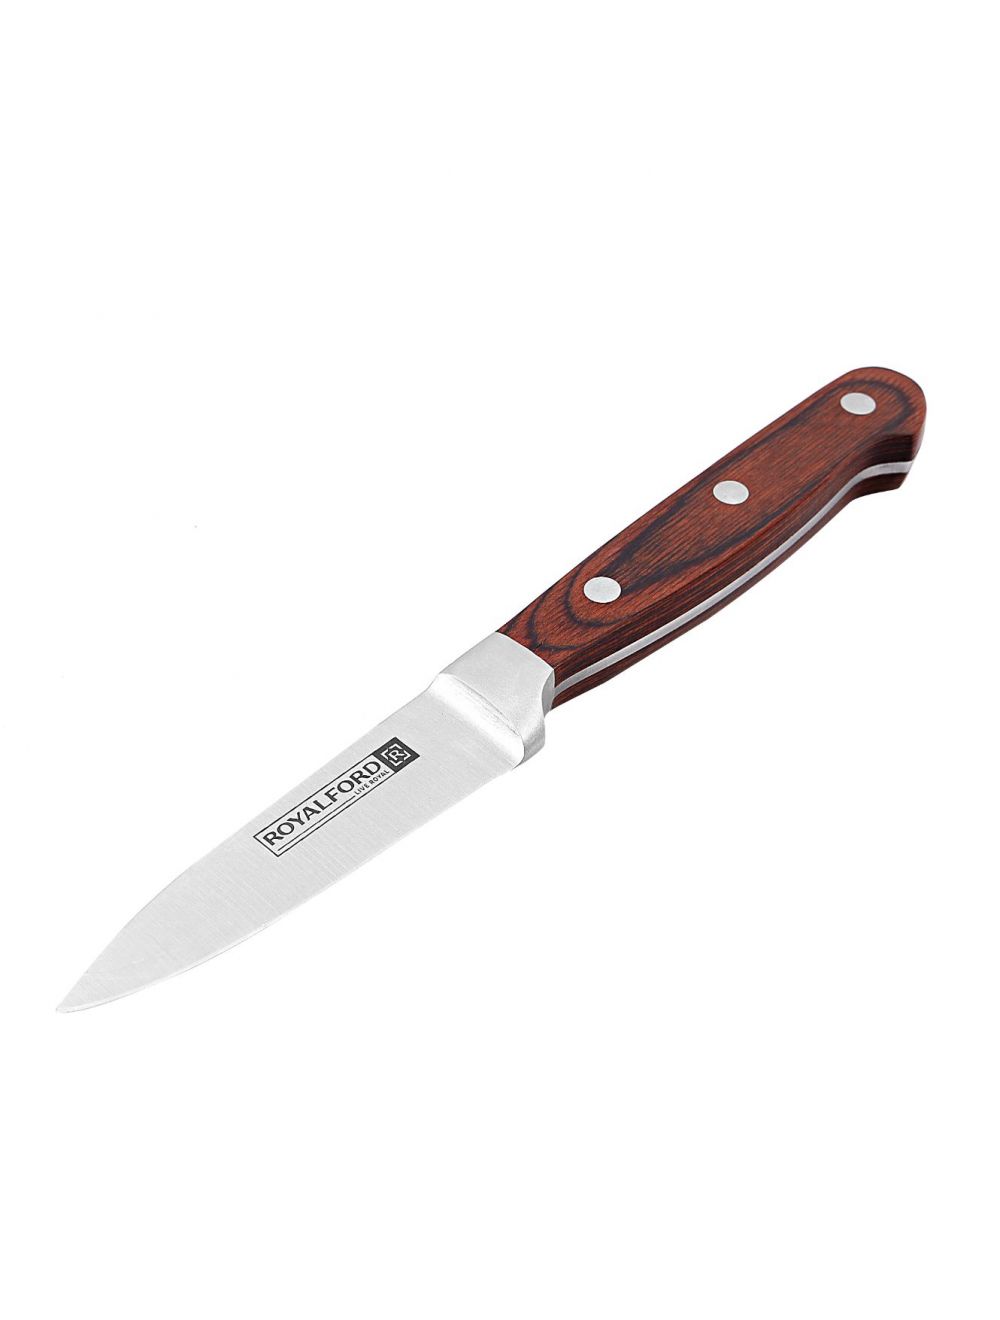 Royalford RF4113 Pairing Knife, 3.5 Inch